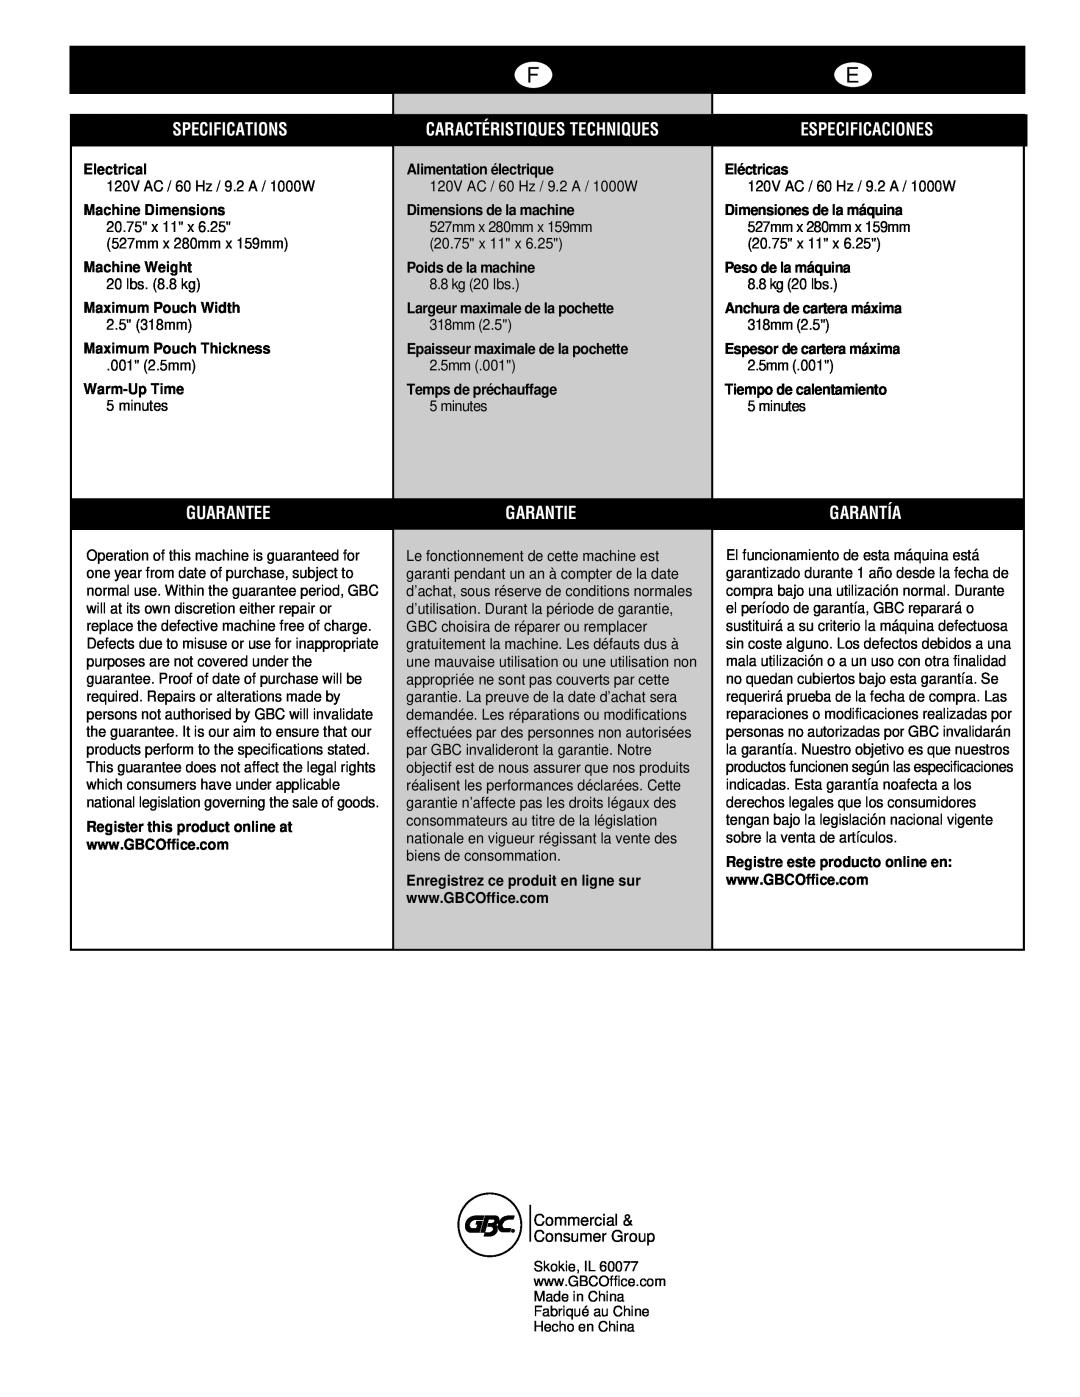 GBC H525 manual Specifications, Caractéristiques Techniques, Especificaciones, Guarantee, Garantie, Garantía 